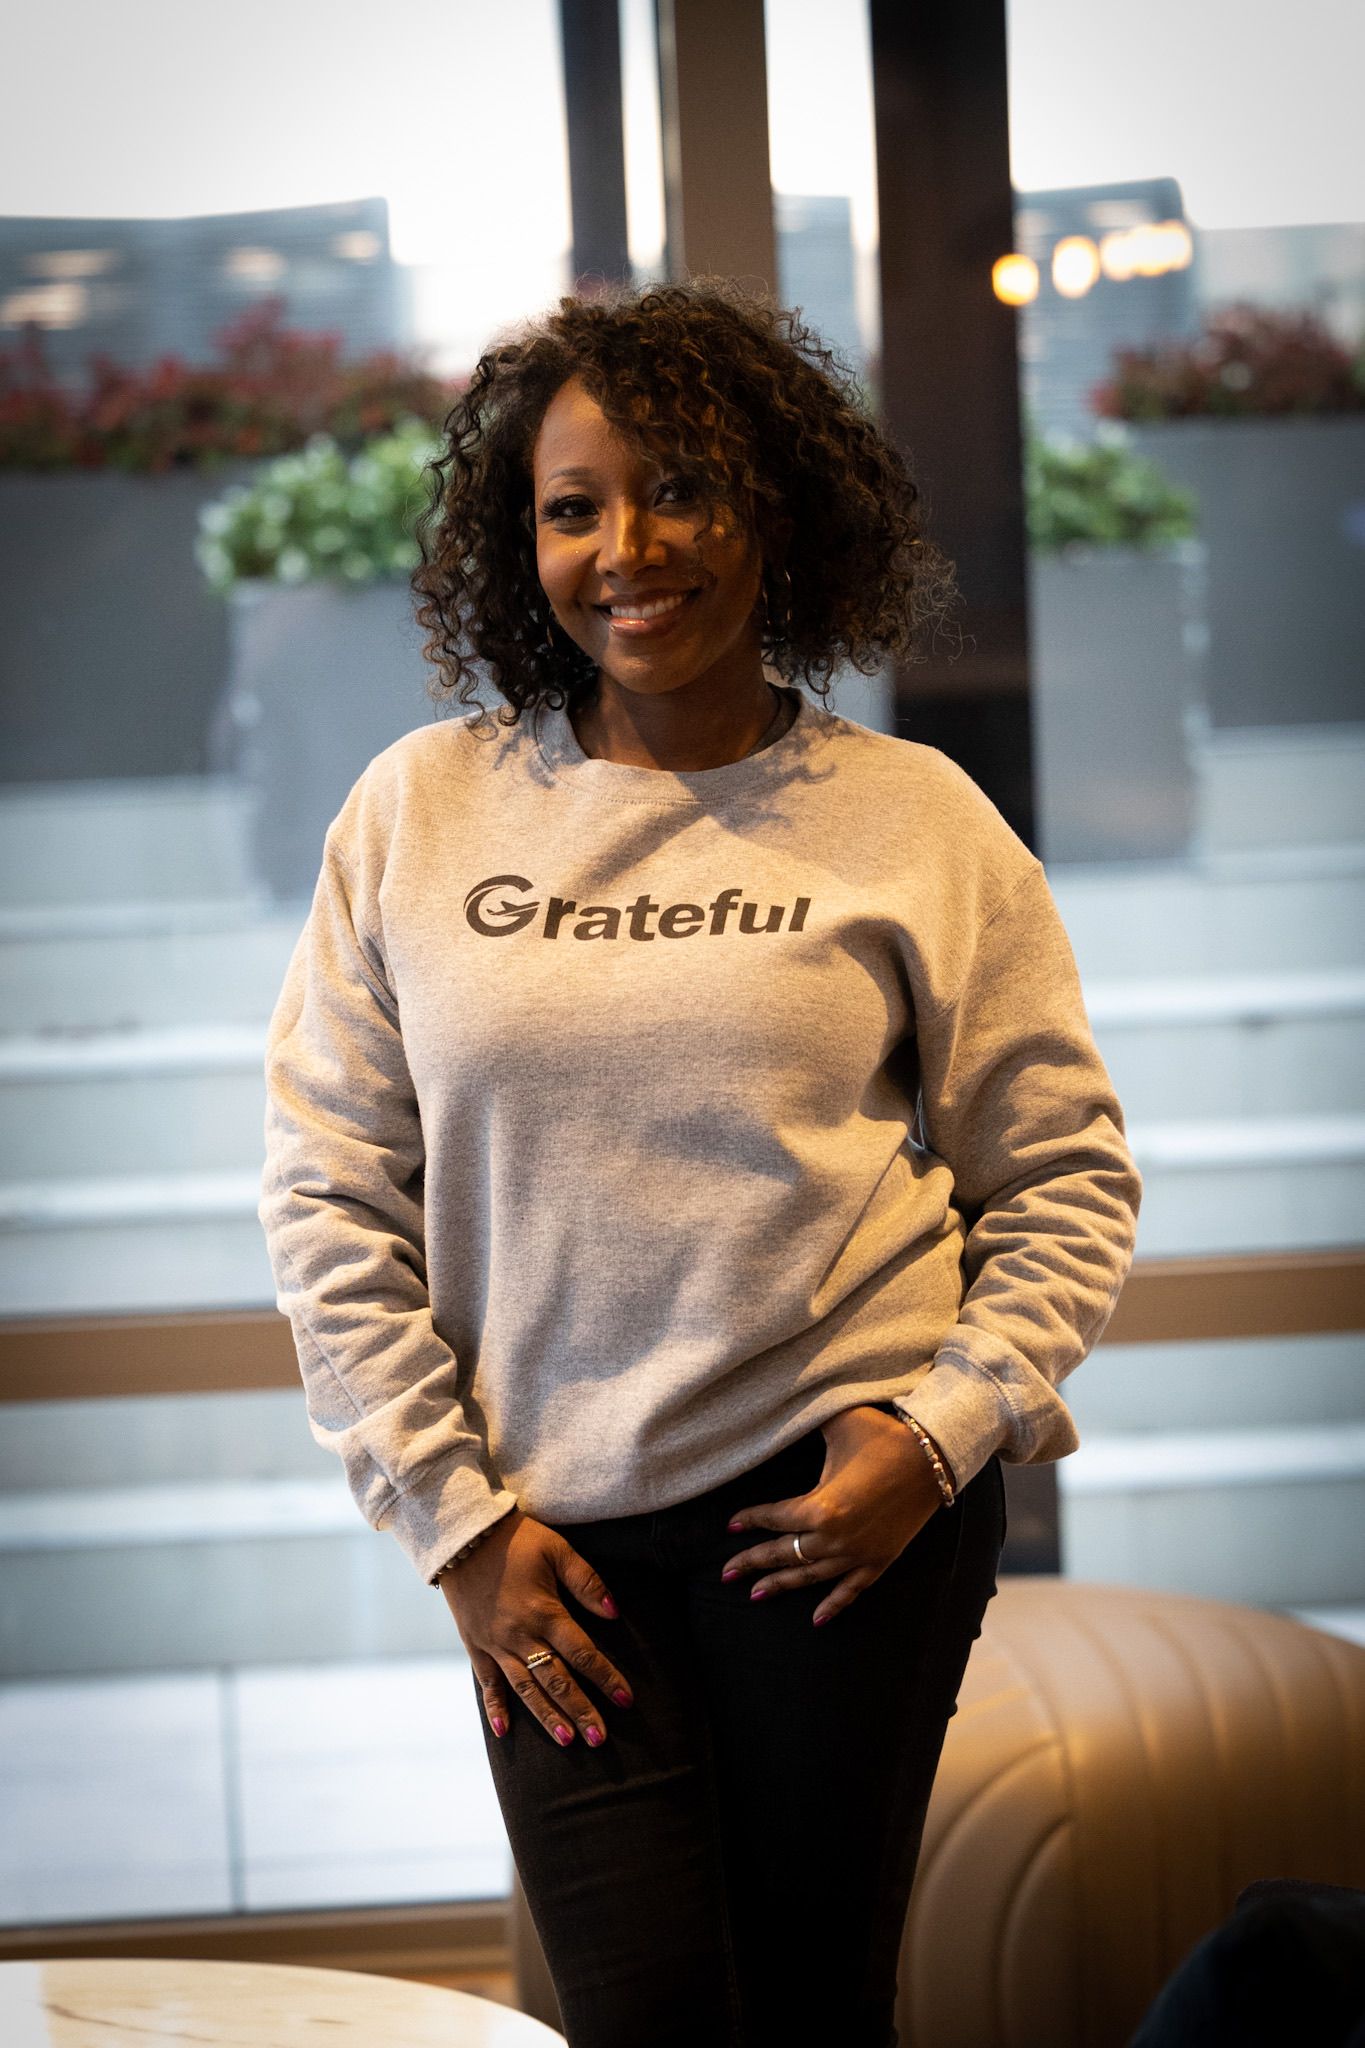 Grateful Unisex Crewneck Sweatshirt